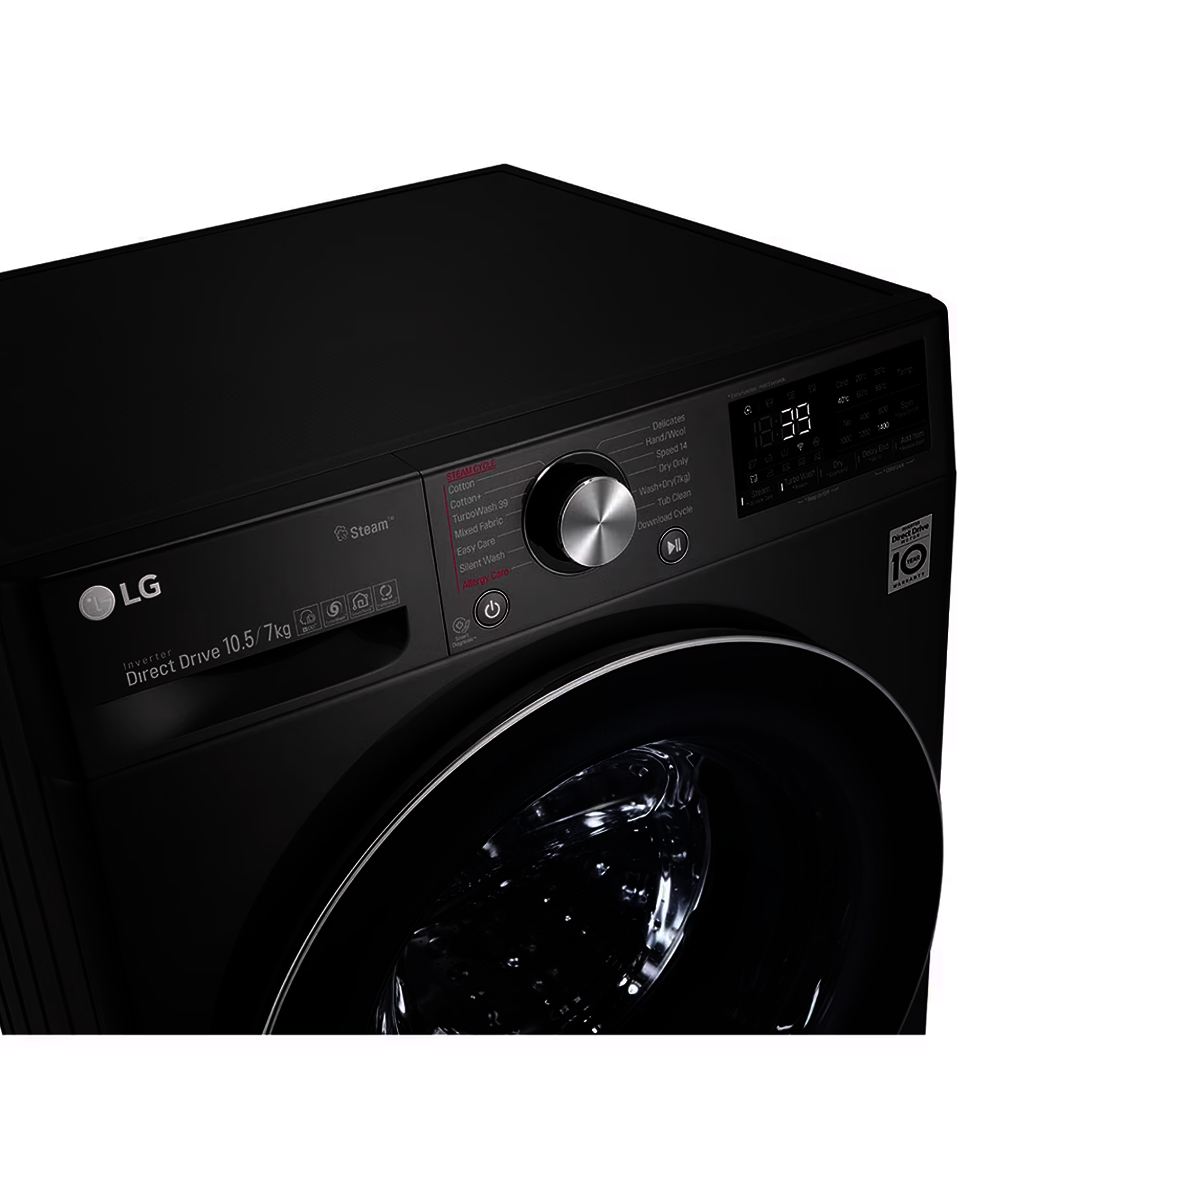 LG F4V5RGPYJE 10.5/7KG Front Load (Wash & Dry) Washing Machine